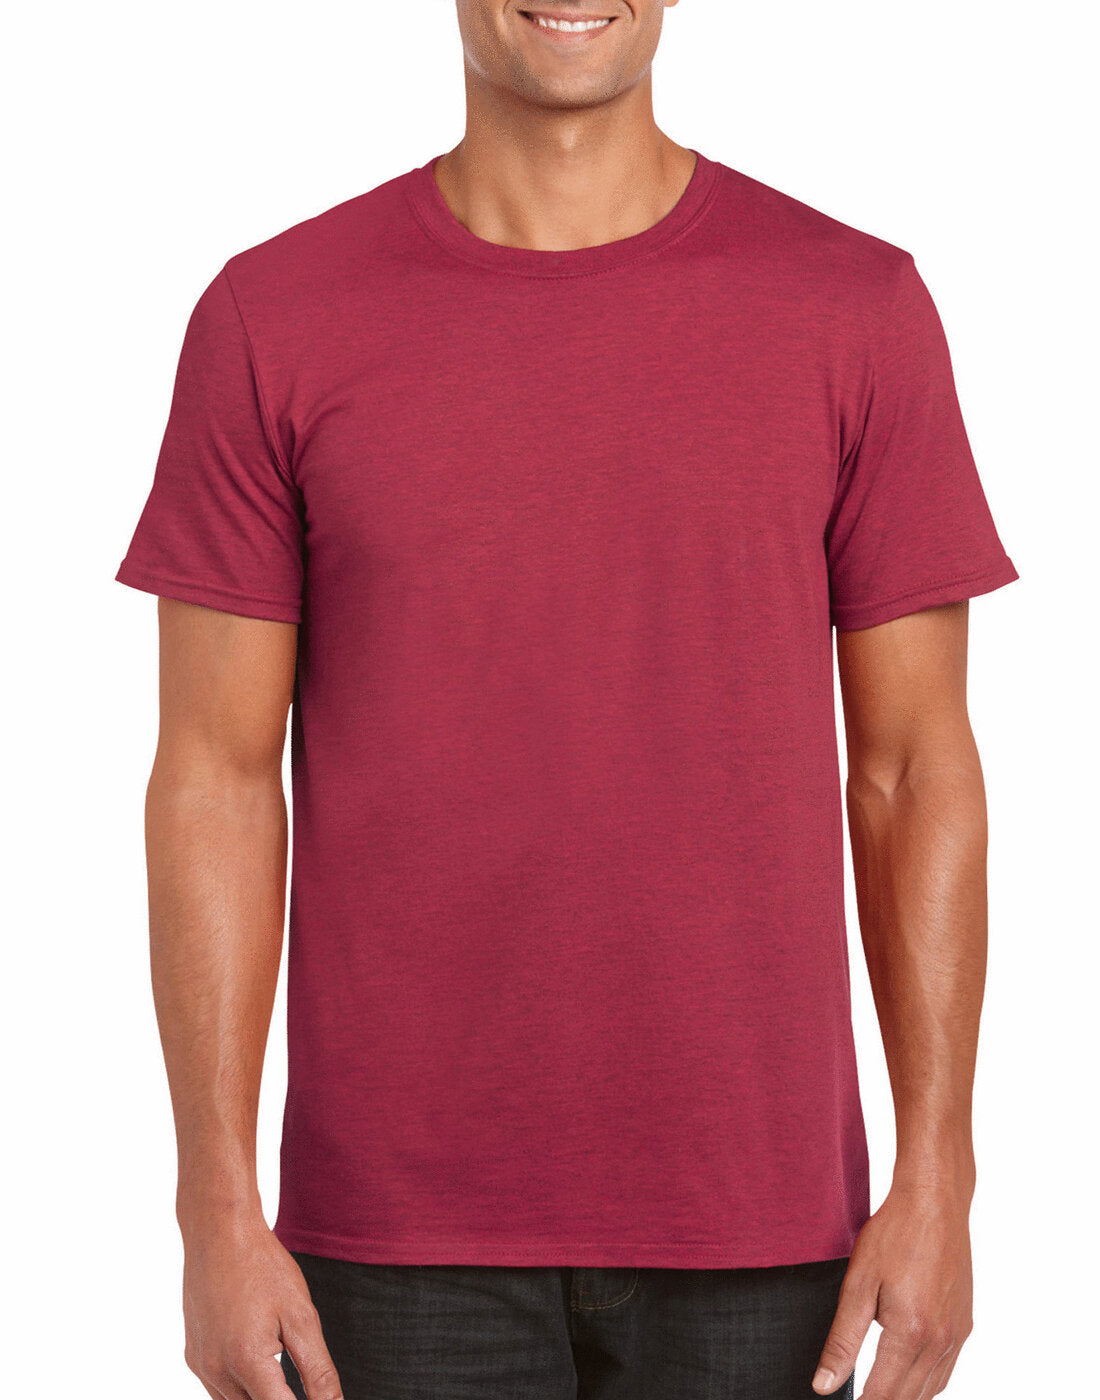 Gildan Adult Softstyle Ringspun T-Shirt - GD01 - Antique Cherry Red